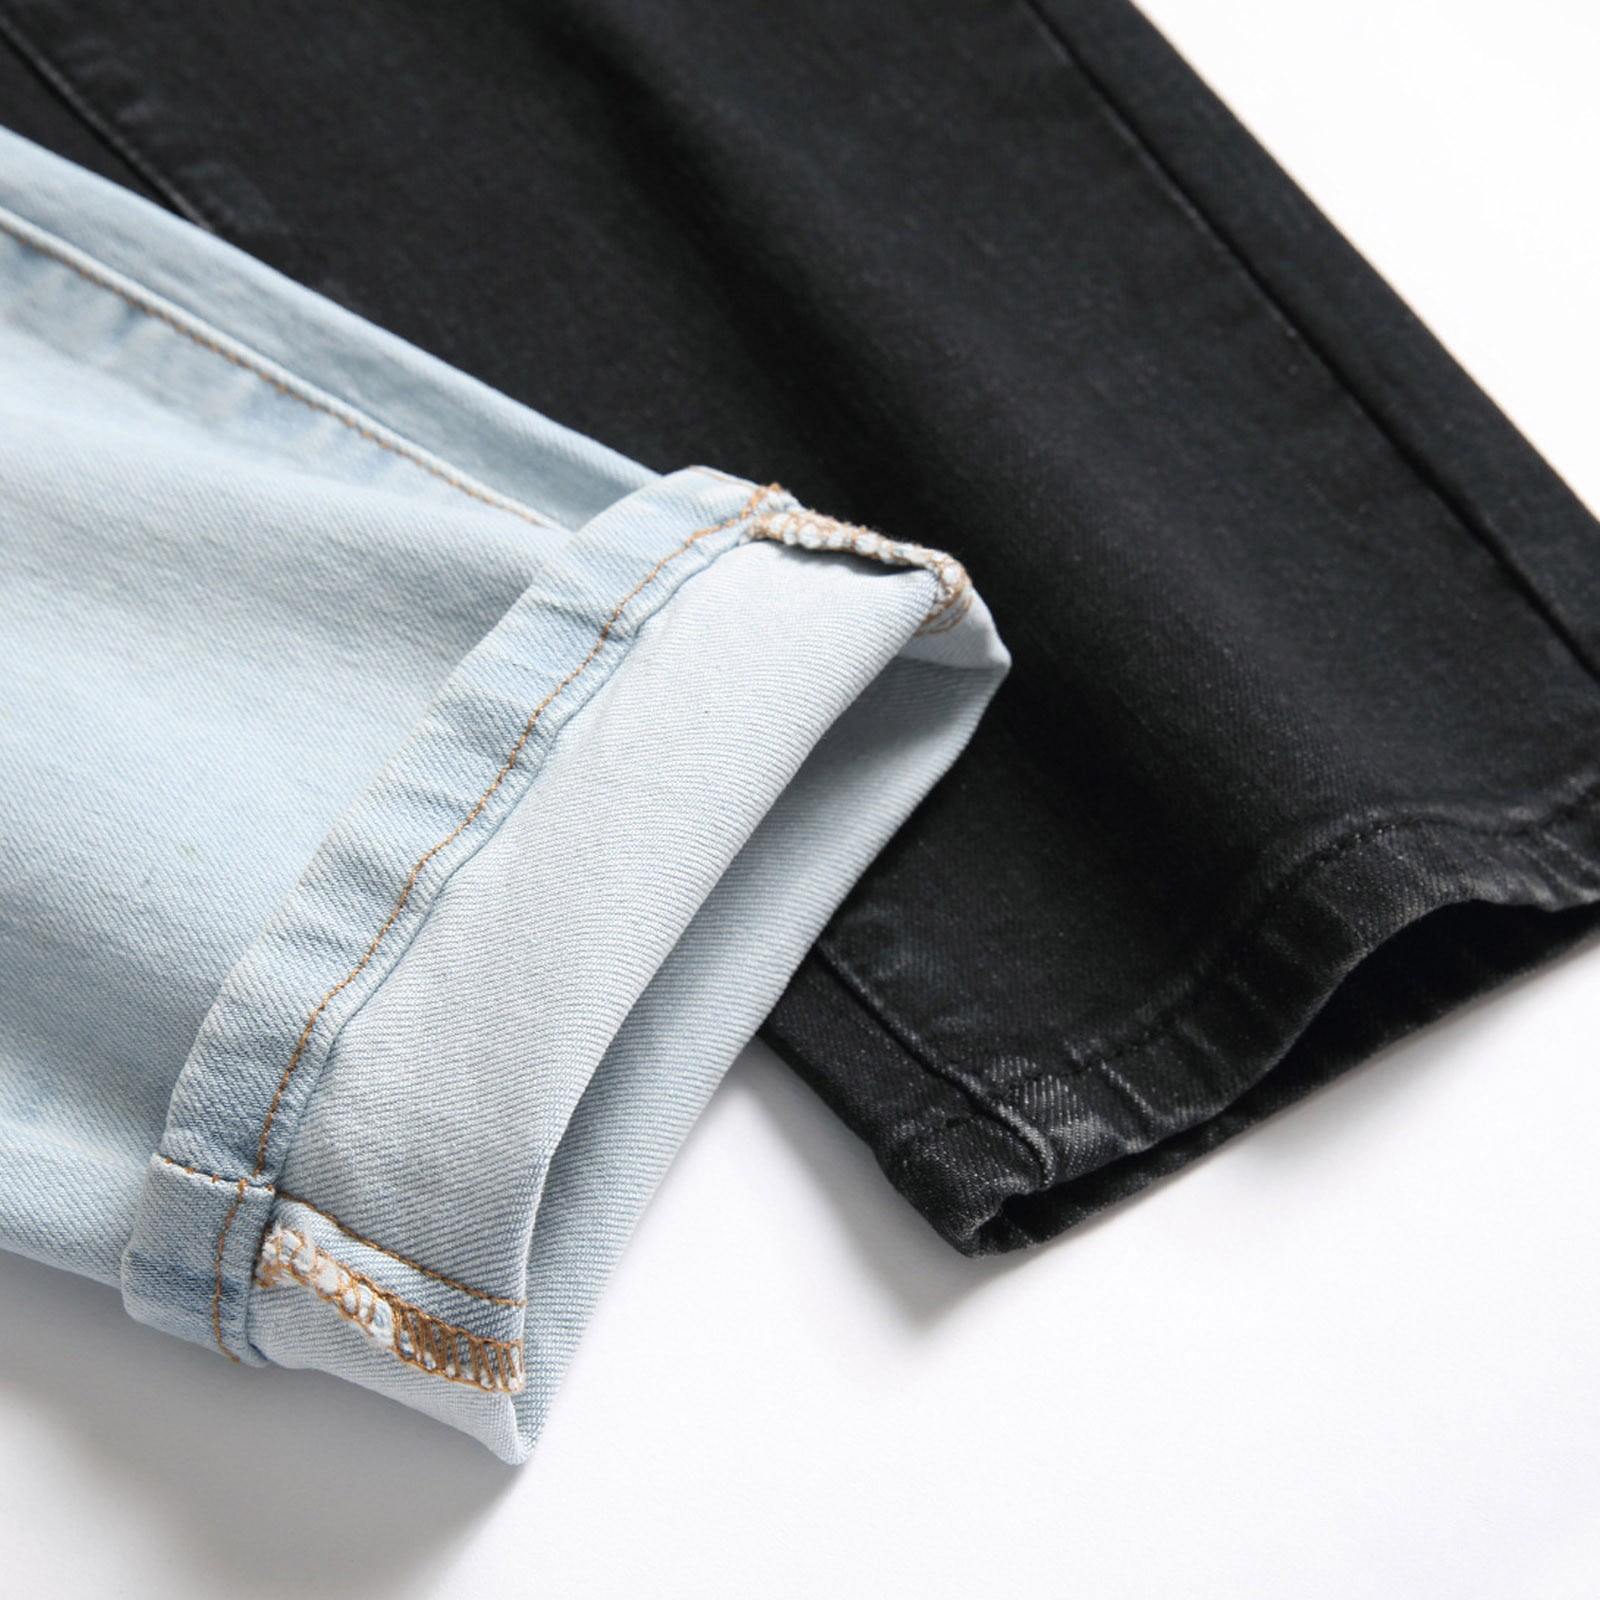 Hfyihgf Men's Skinny Jeans Fashion Casual Color Block Patchwork Slim Fit Cotton Denim Pencil Pants(Red,S), Size: Small